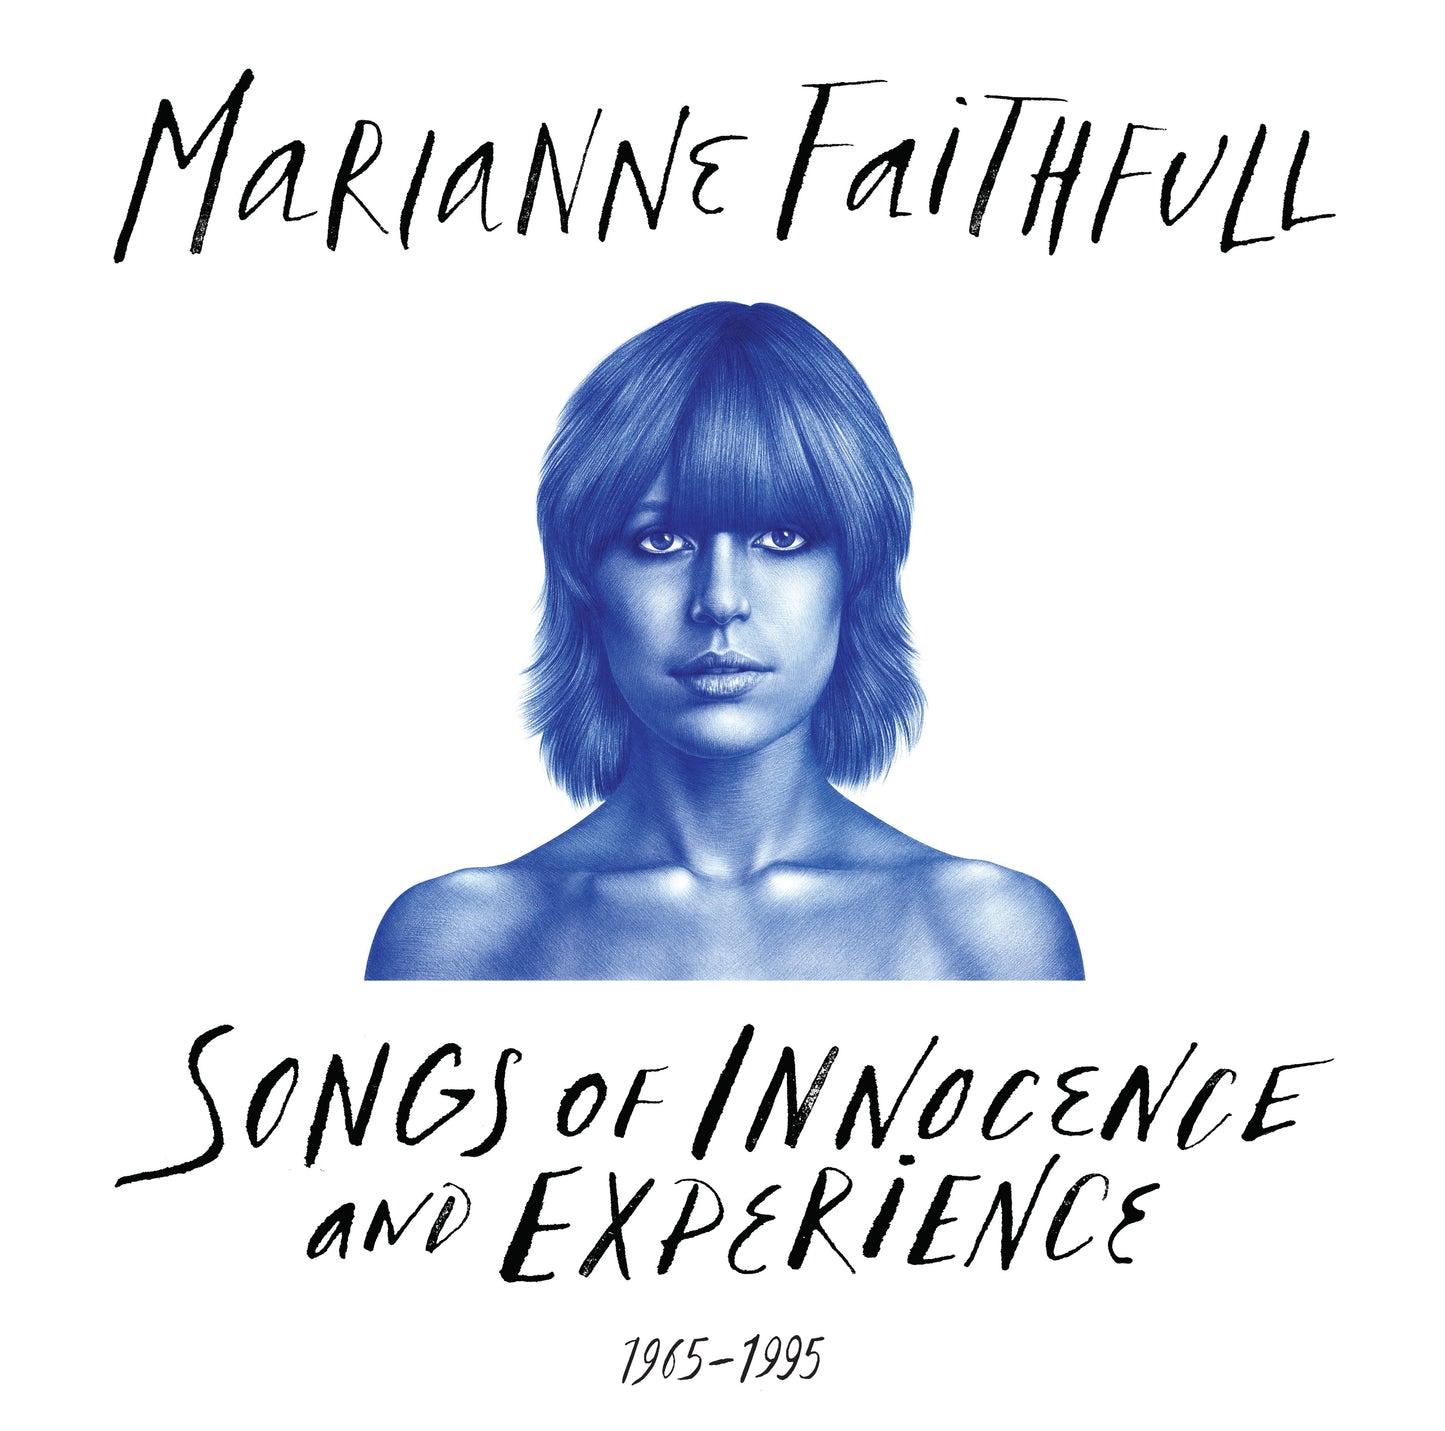 Marianne Faithfull - Songs of Innocence and Experience